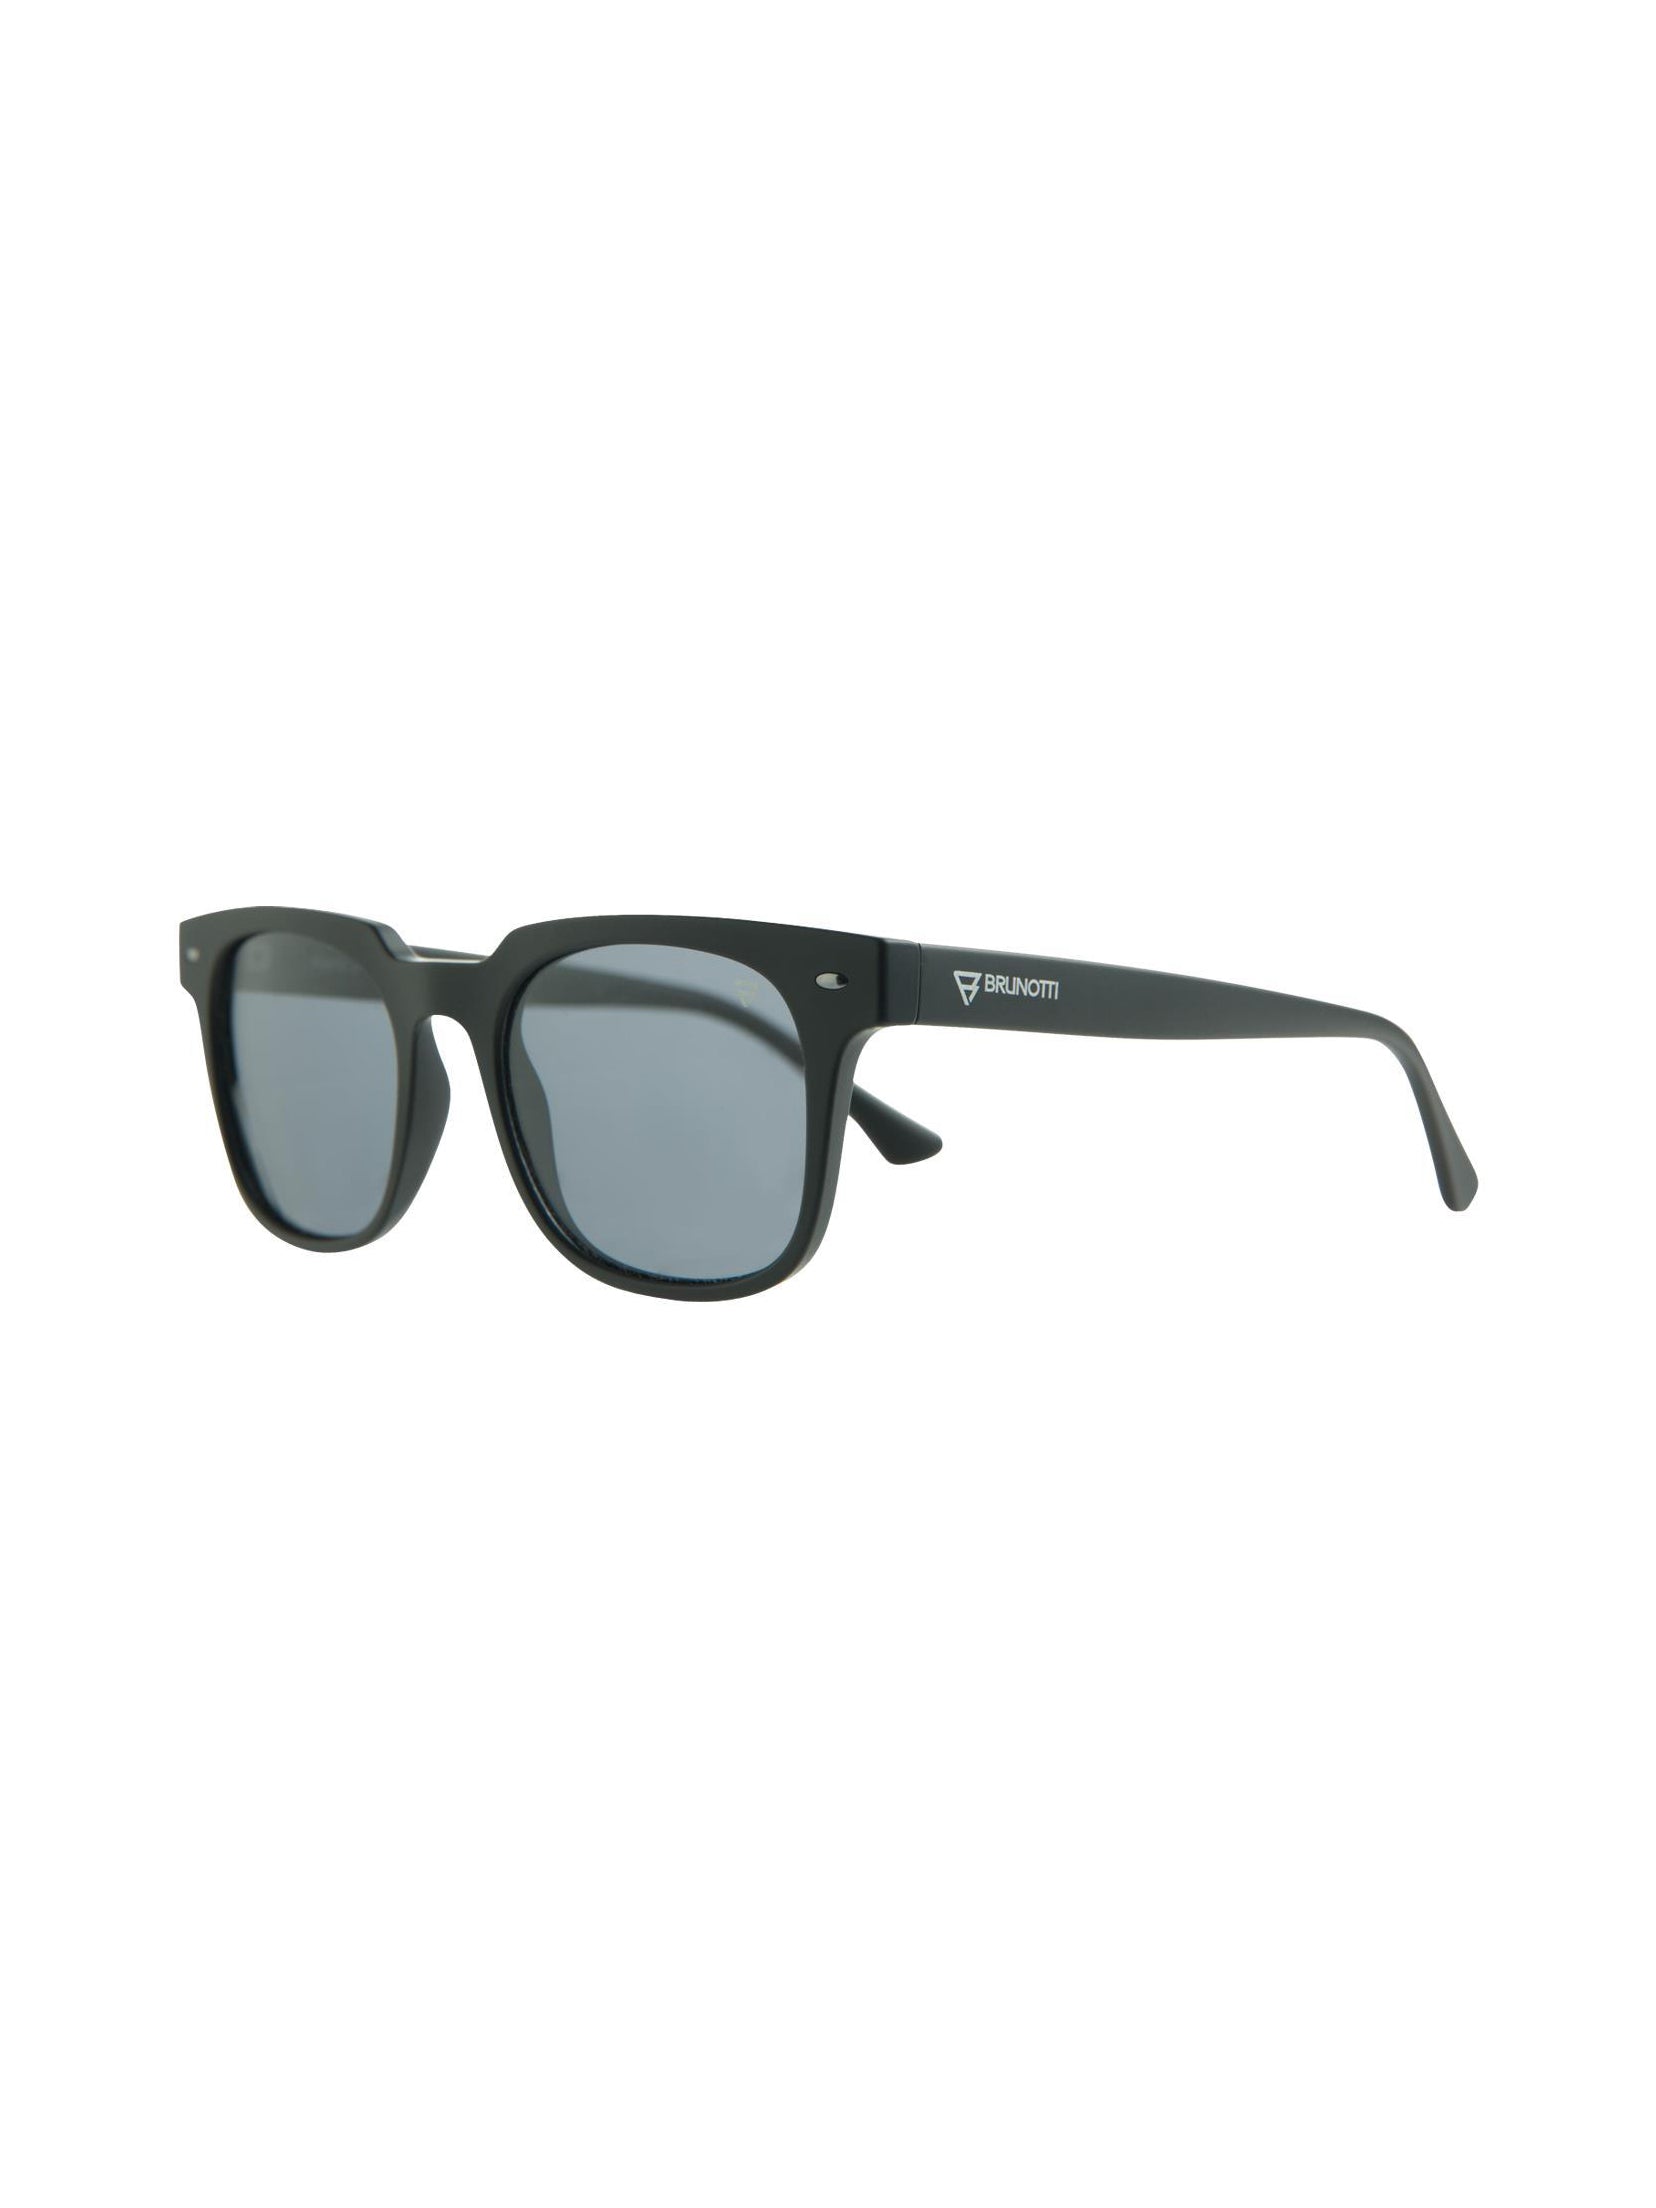 Buy Polarised Adult Hiking Aviator Sunglasses Cat 3 MH120 at Amazon.in